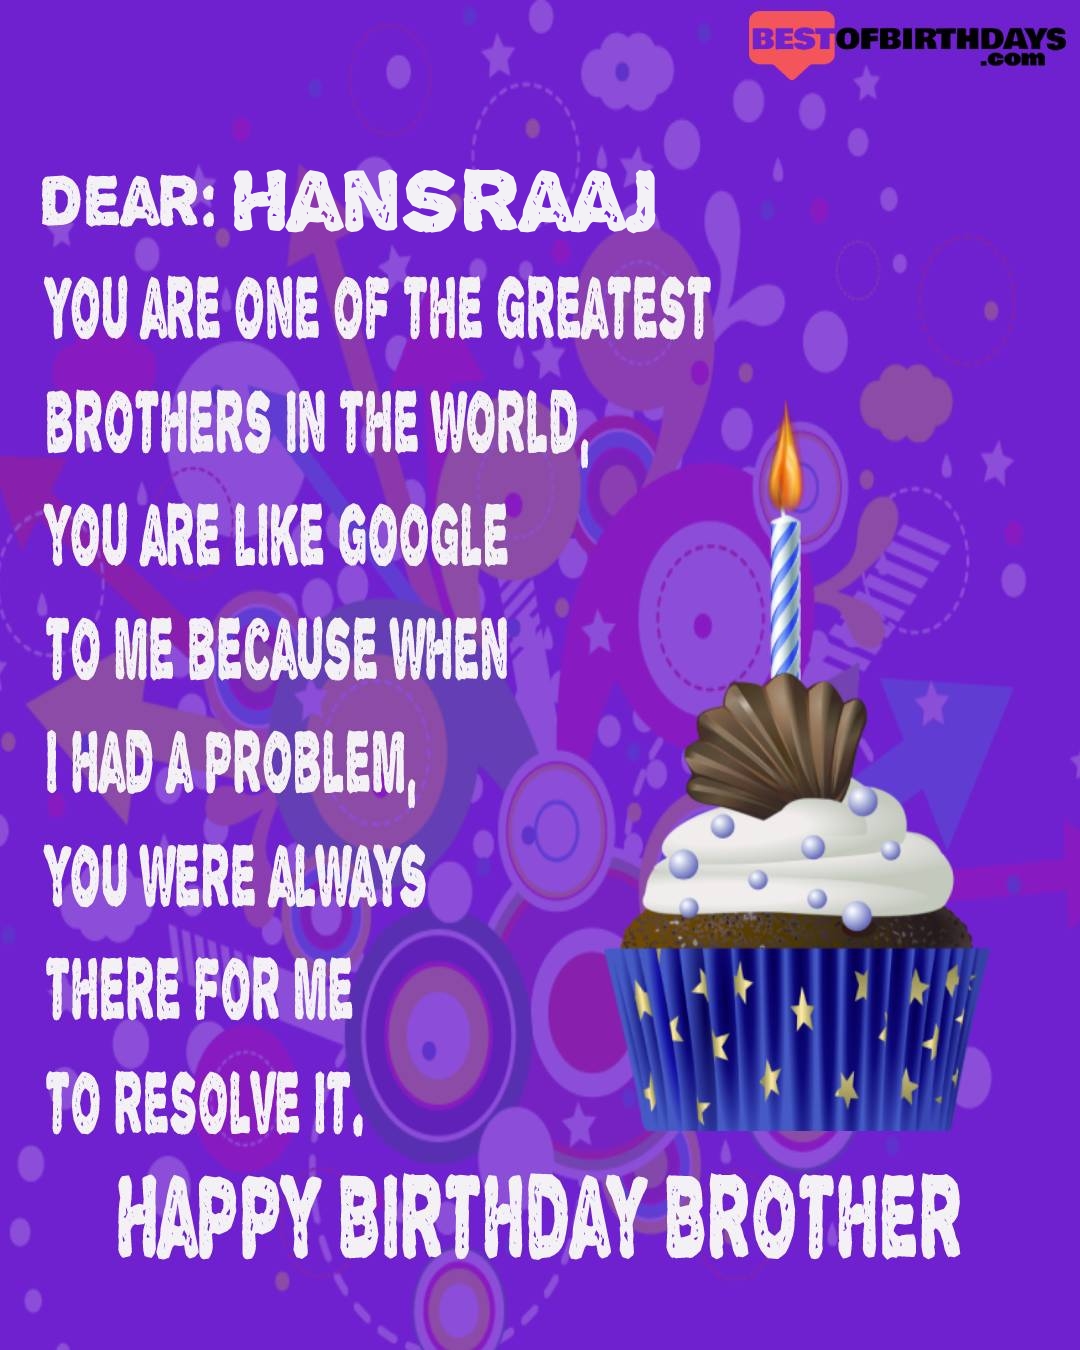 Happy birthday hansraaj bhai brother bro